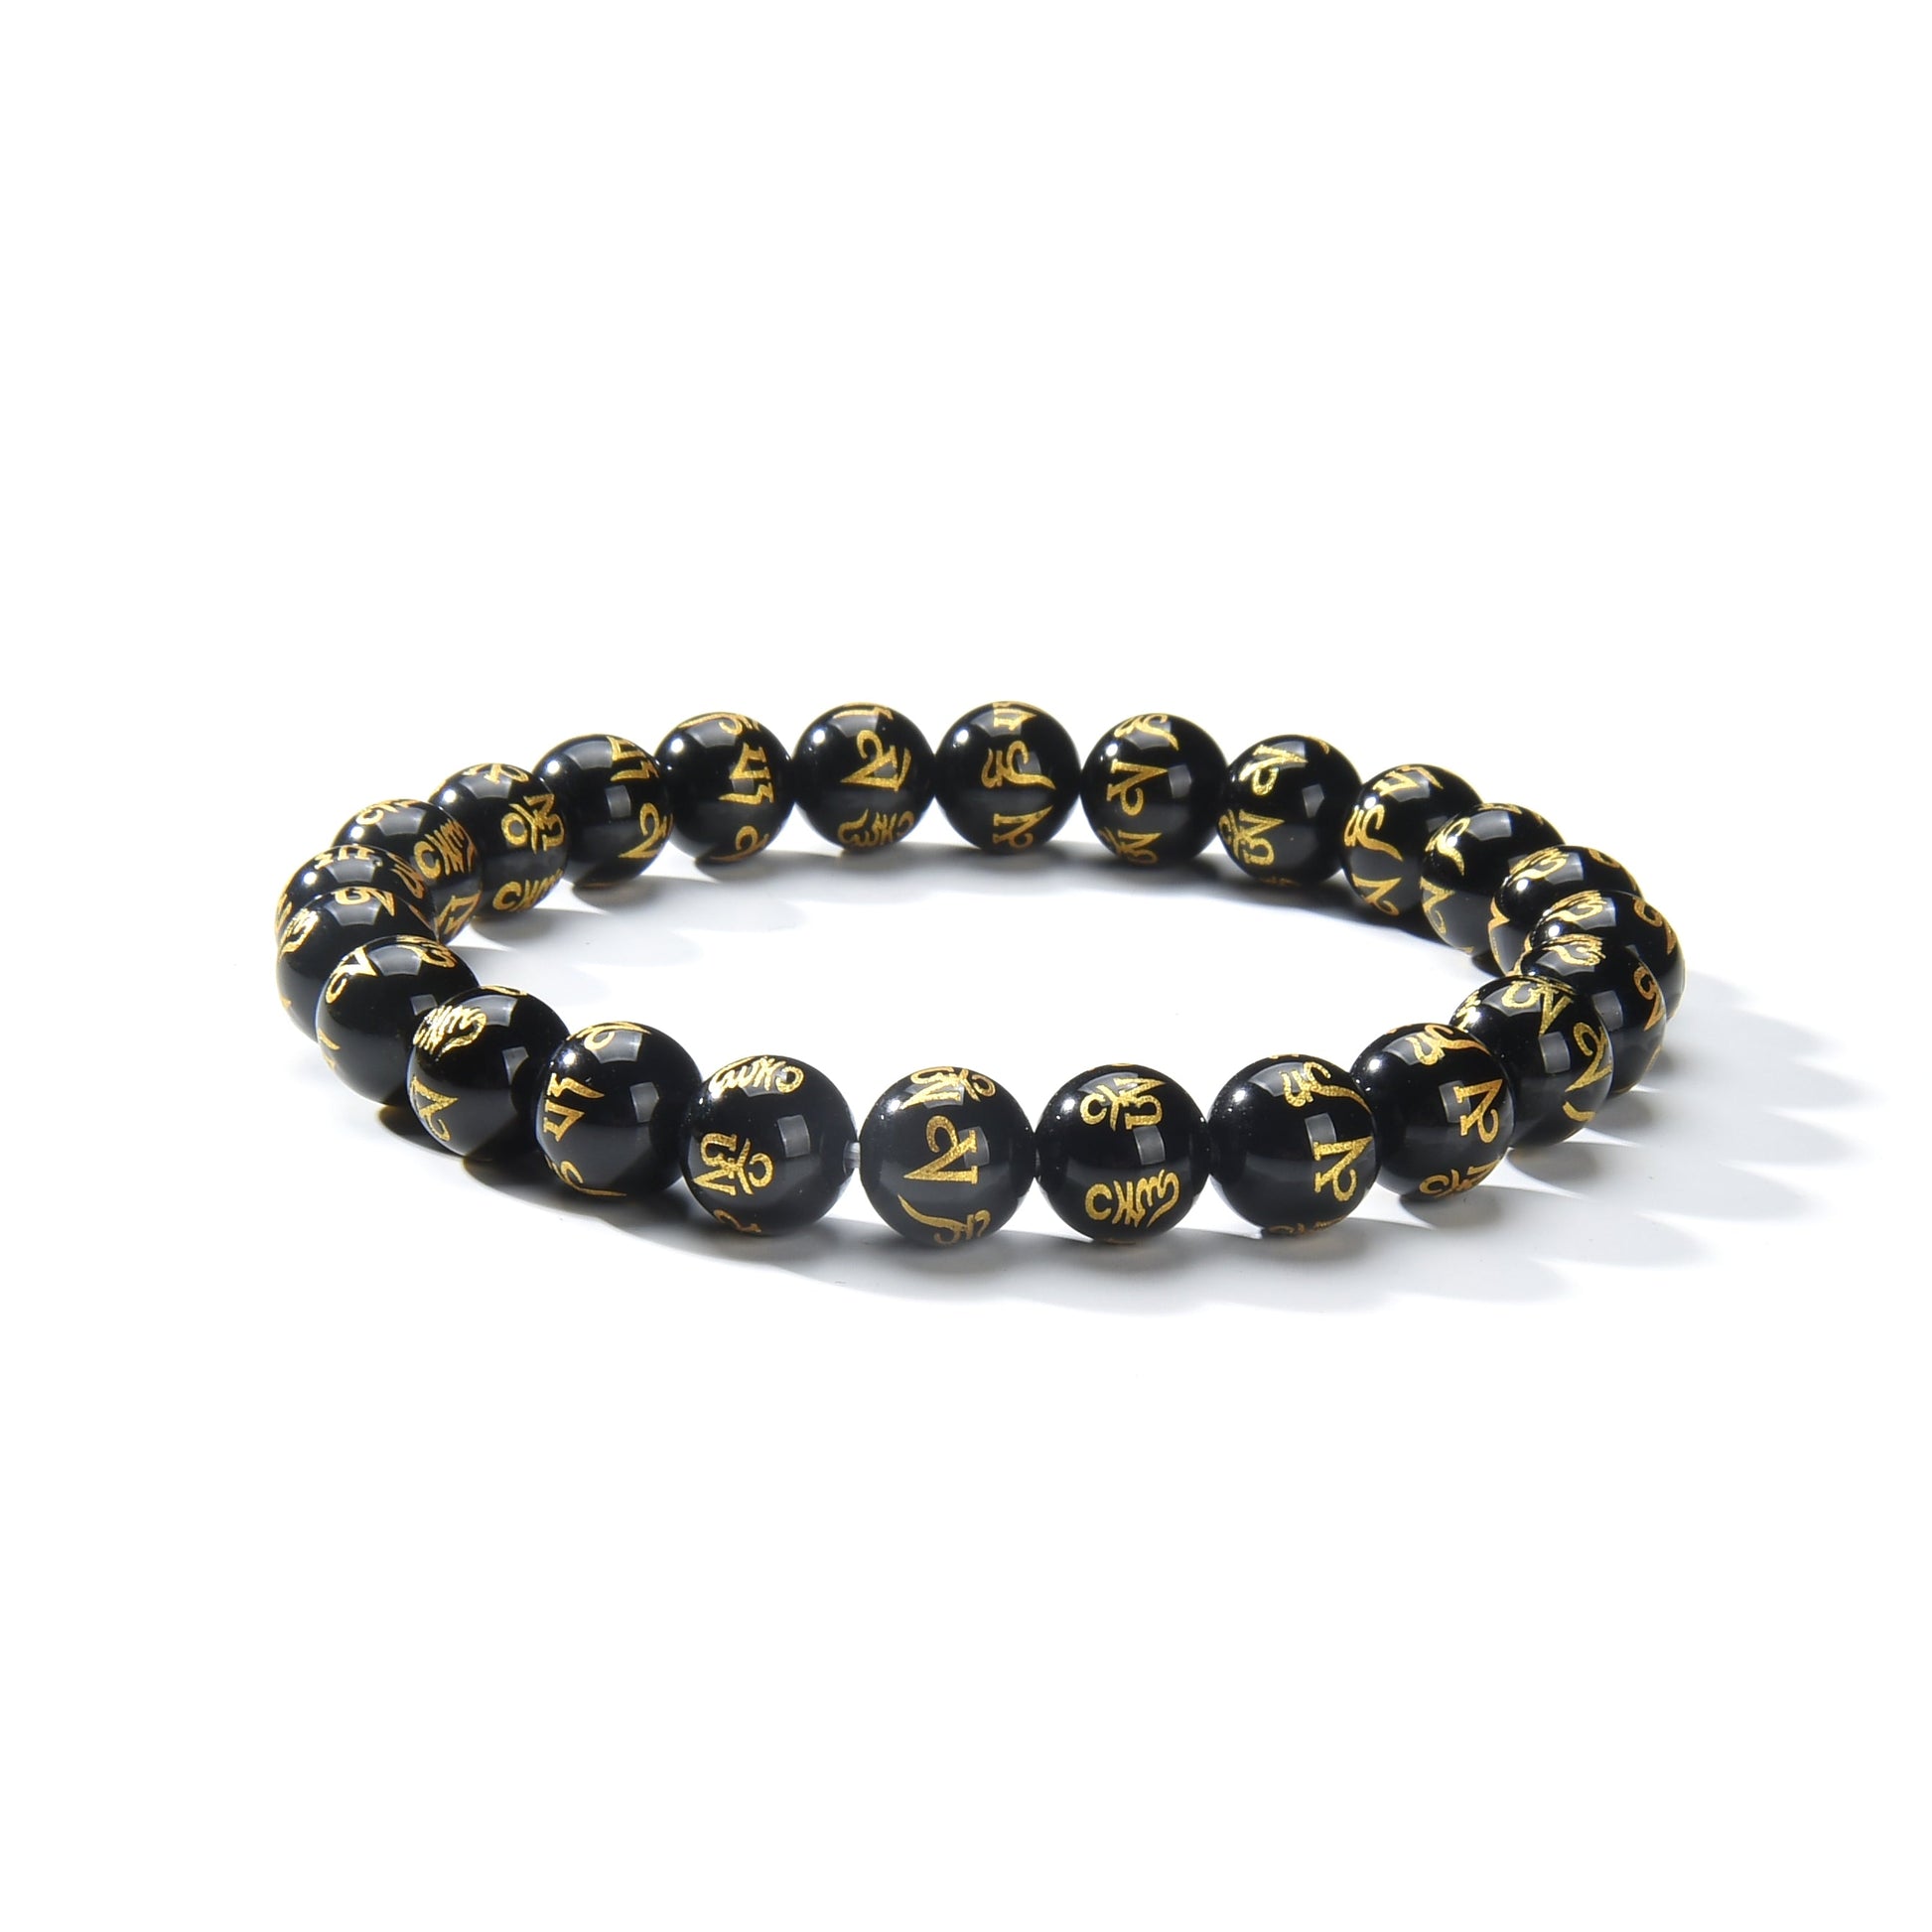 Black Agate Carved Buddha Six Word Admonition Round Beads Bracelet 8mm